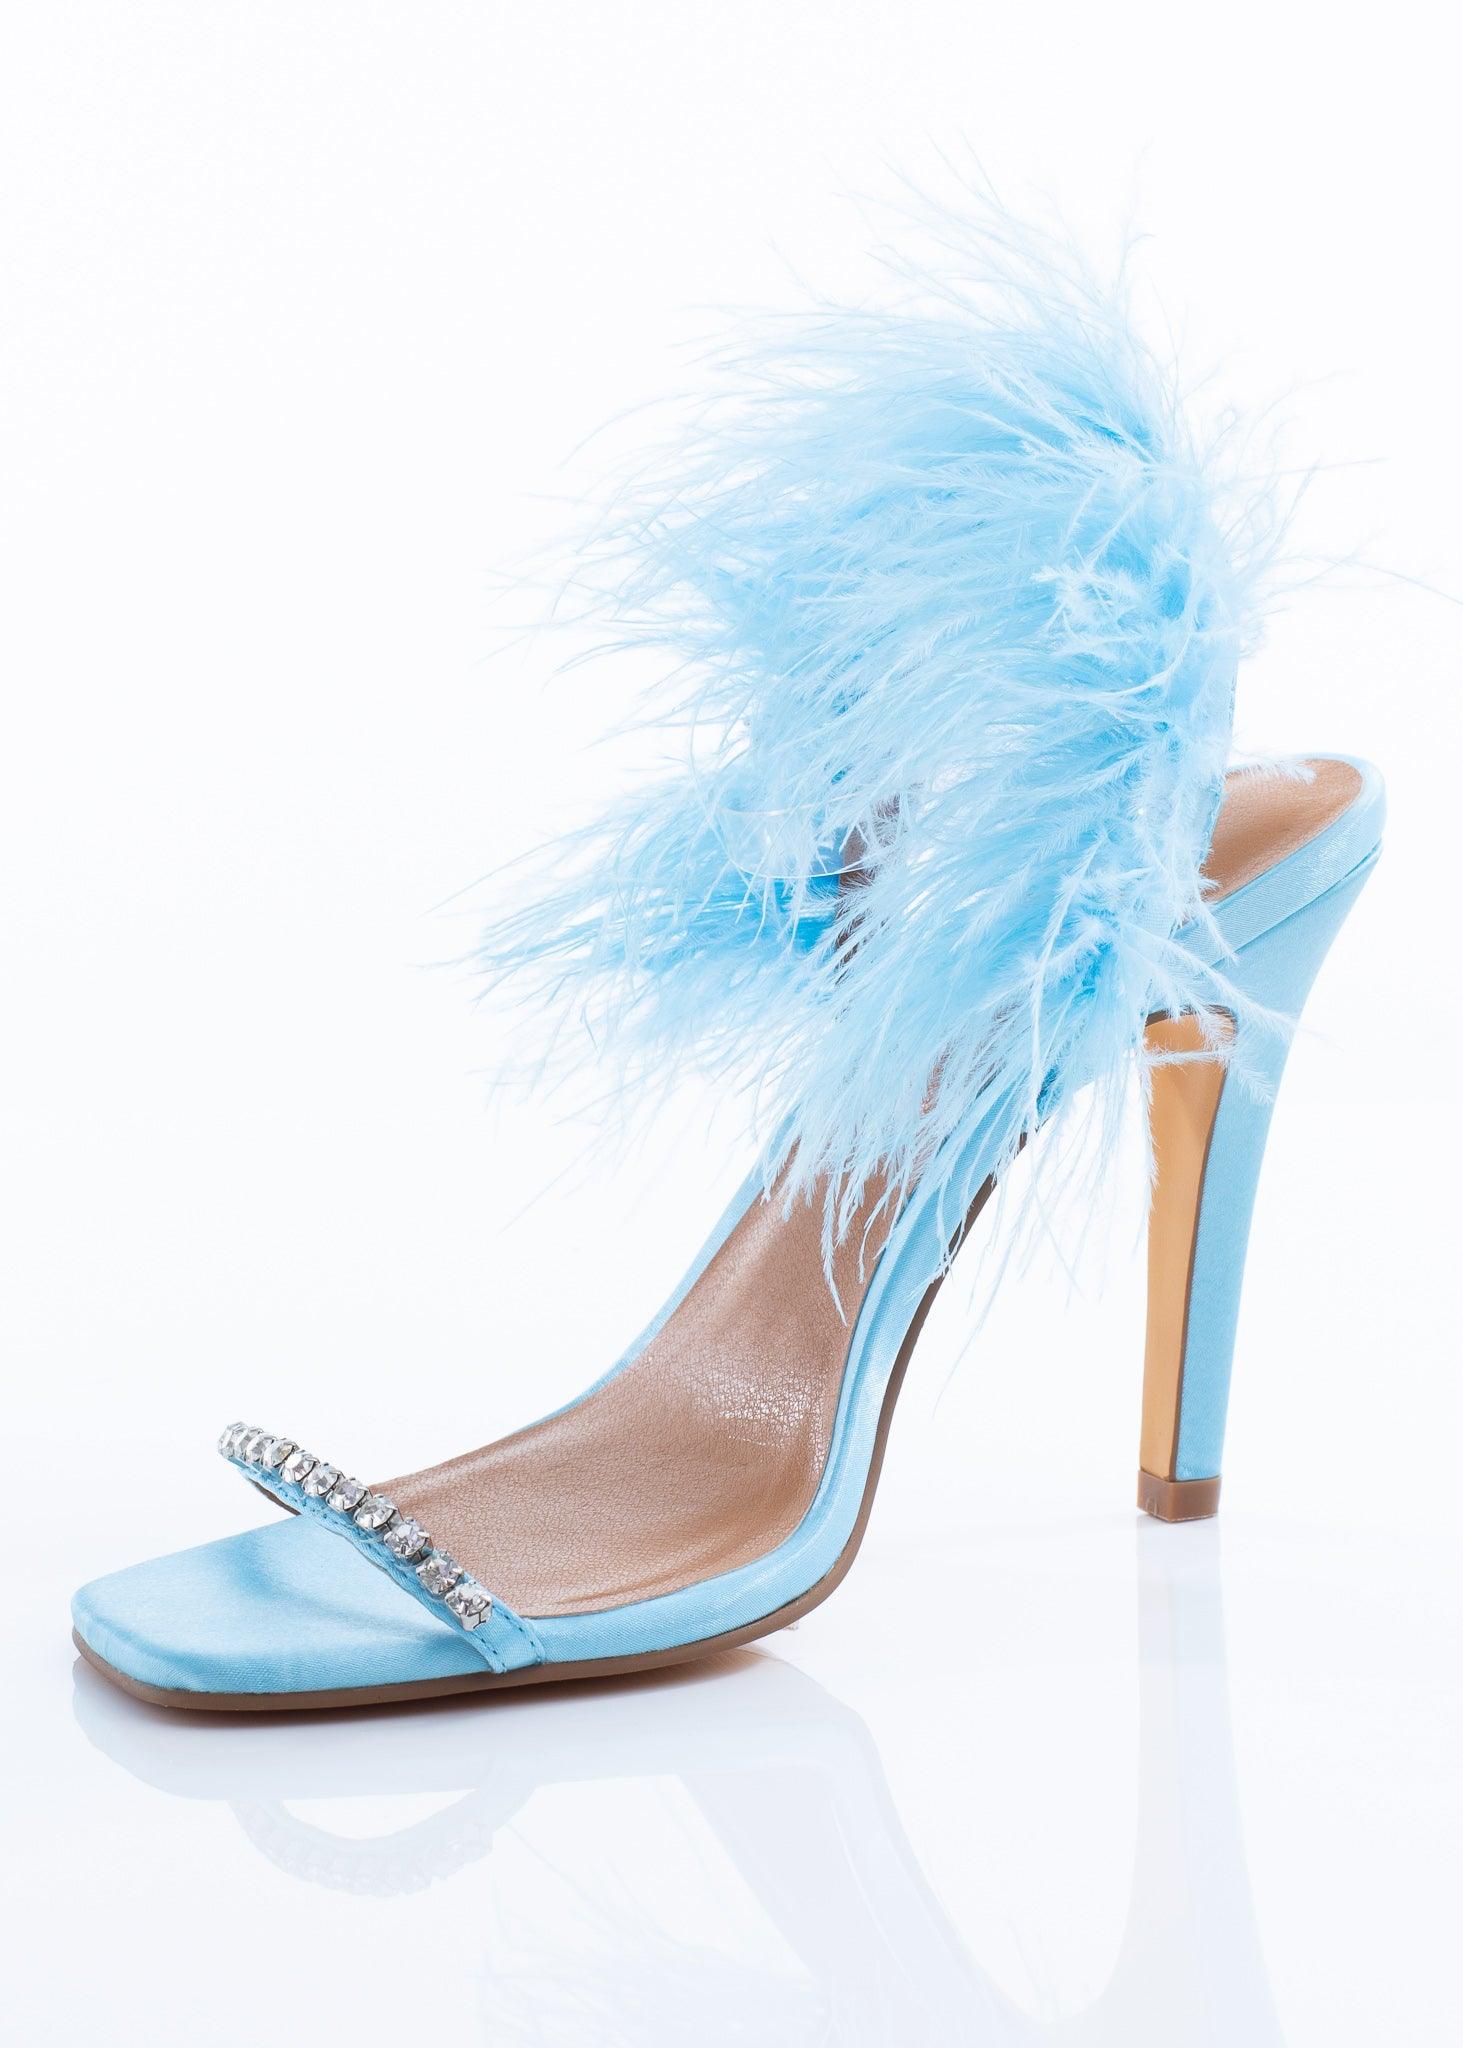 Ann Marino Royal Blue Sequin Pumps Shoes Women's 8.5B Vogue 3